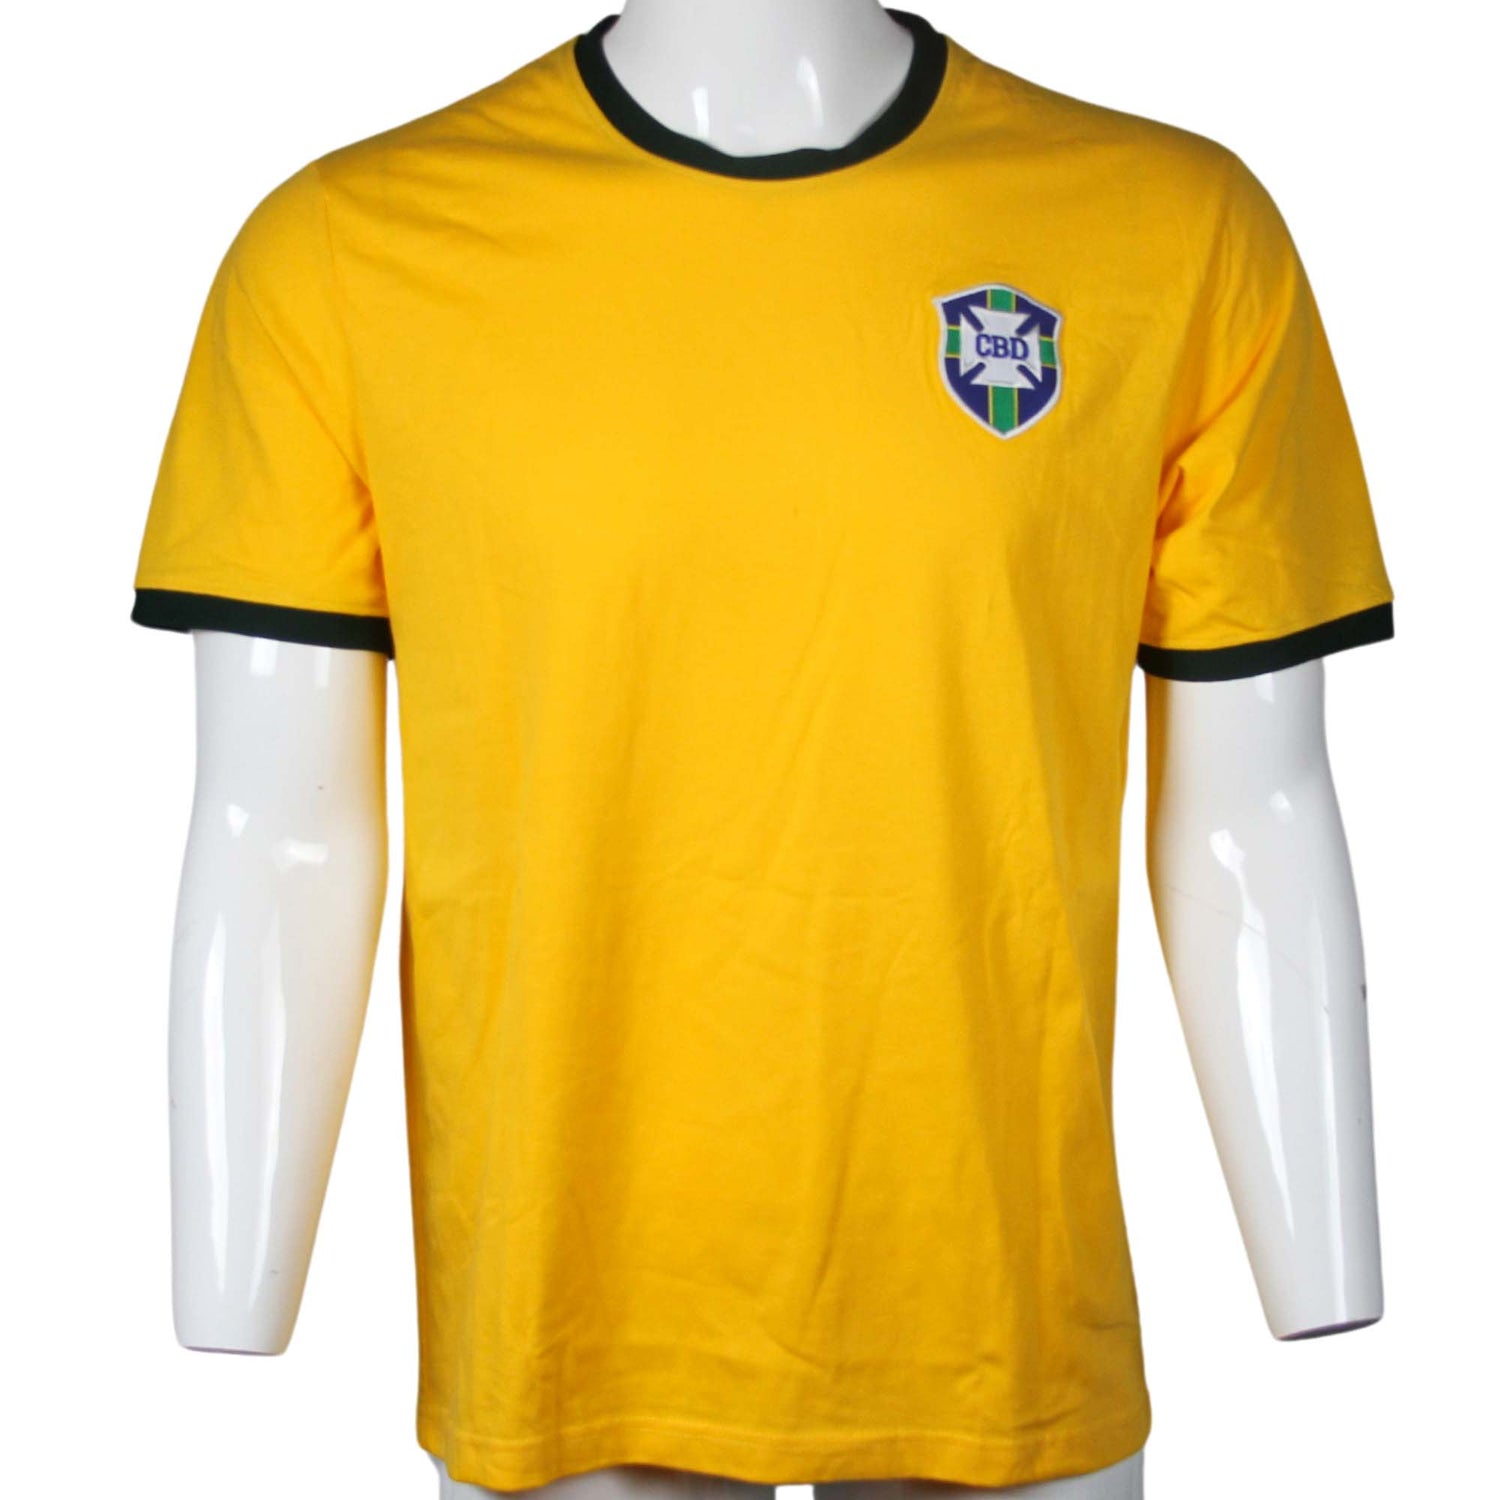 Pele Signed Brazil Jersey Graded Beckett Front